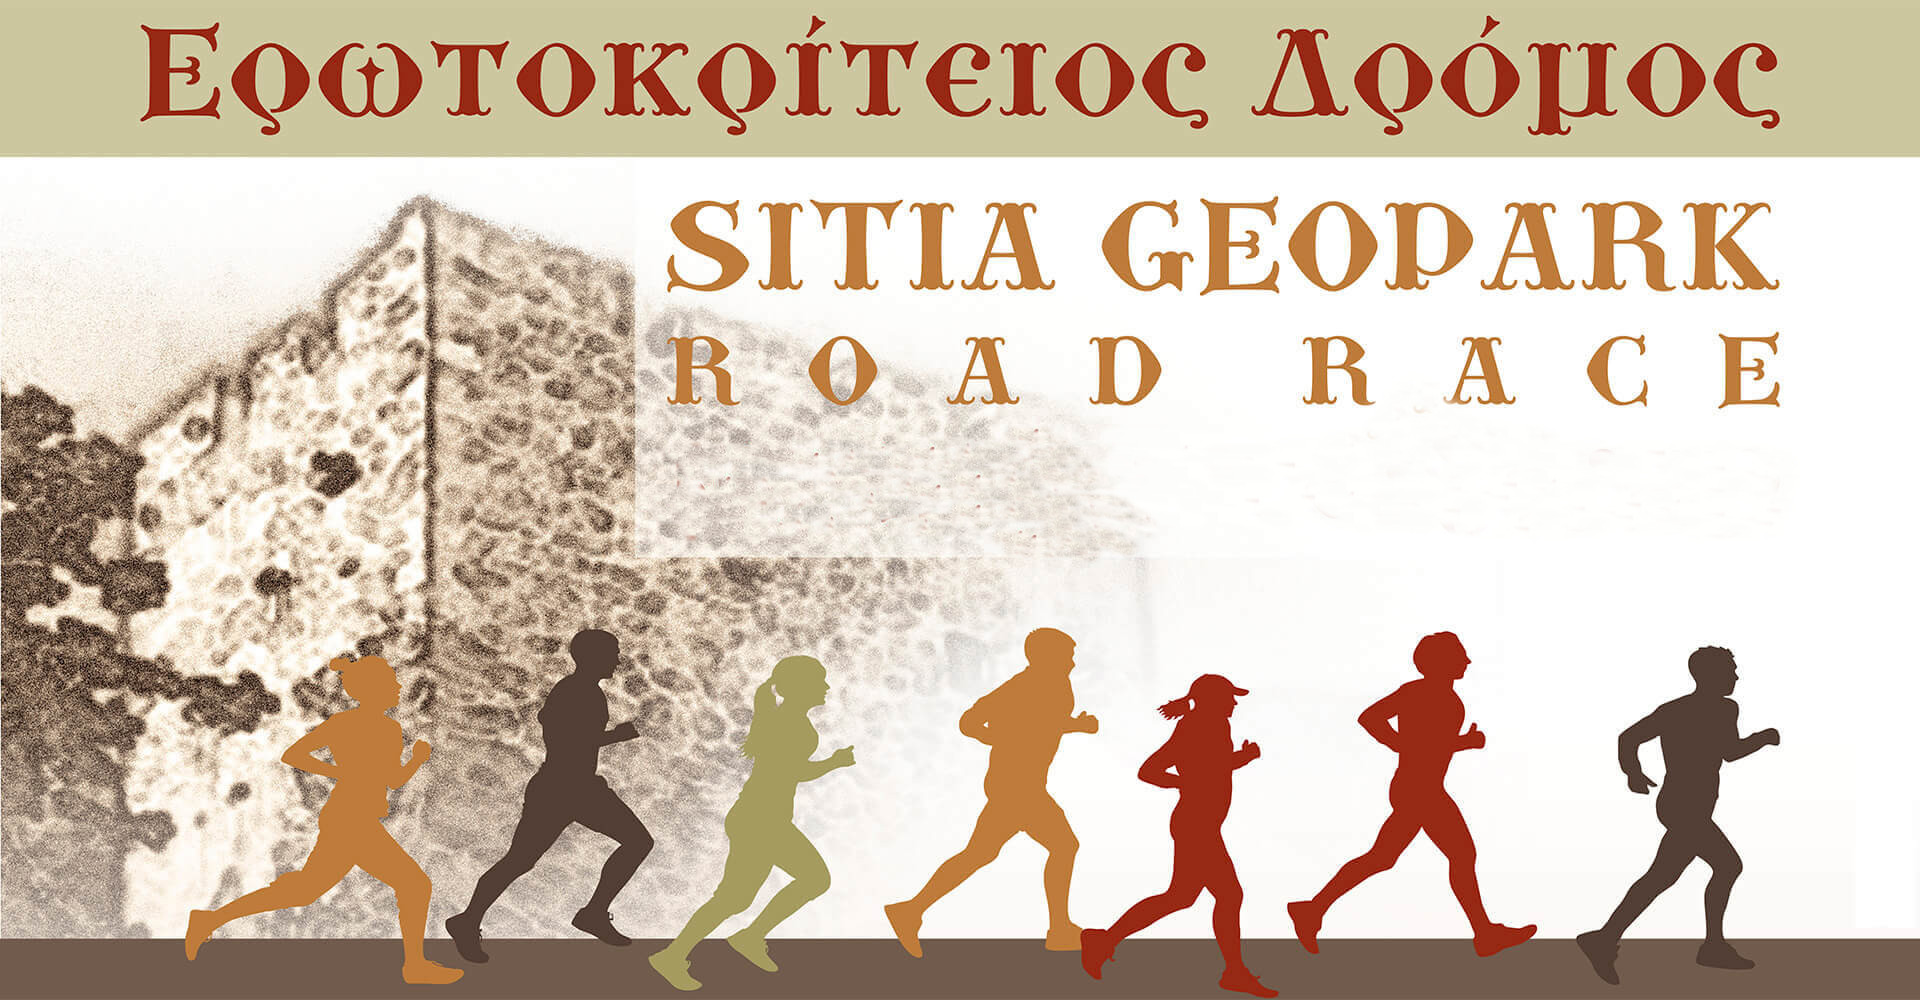 Sitia Geopark Road Race 2019 "Ερωτοκρίτειος Δρόμος" - 2,5χλμ (παίδων)